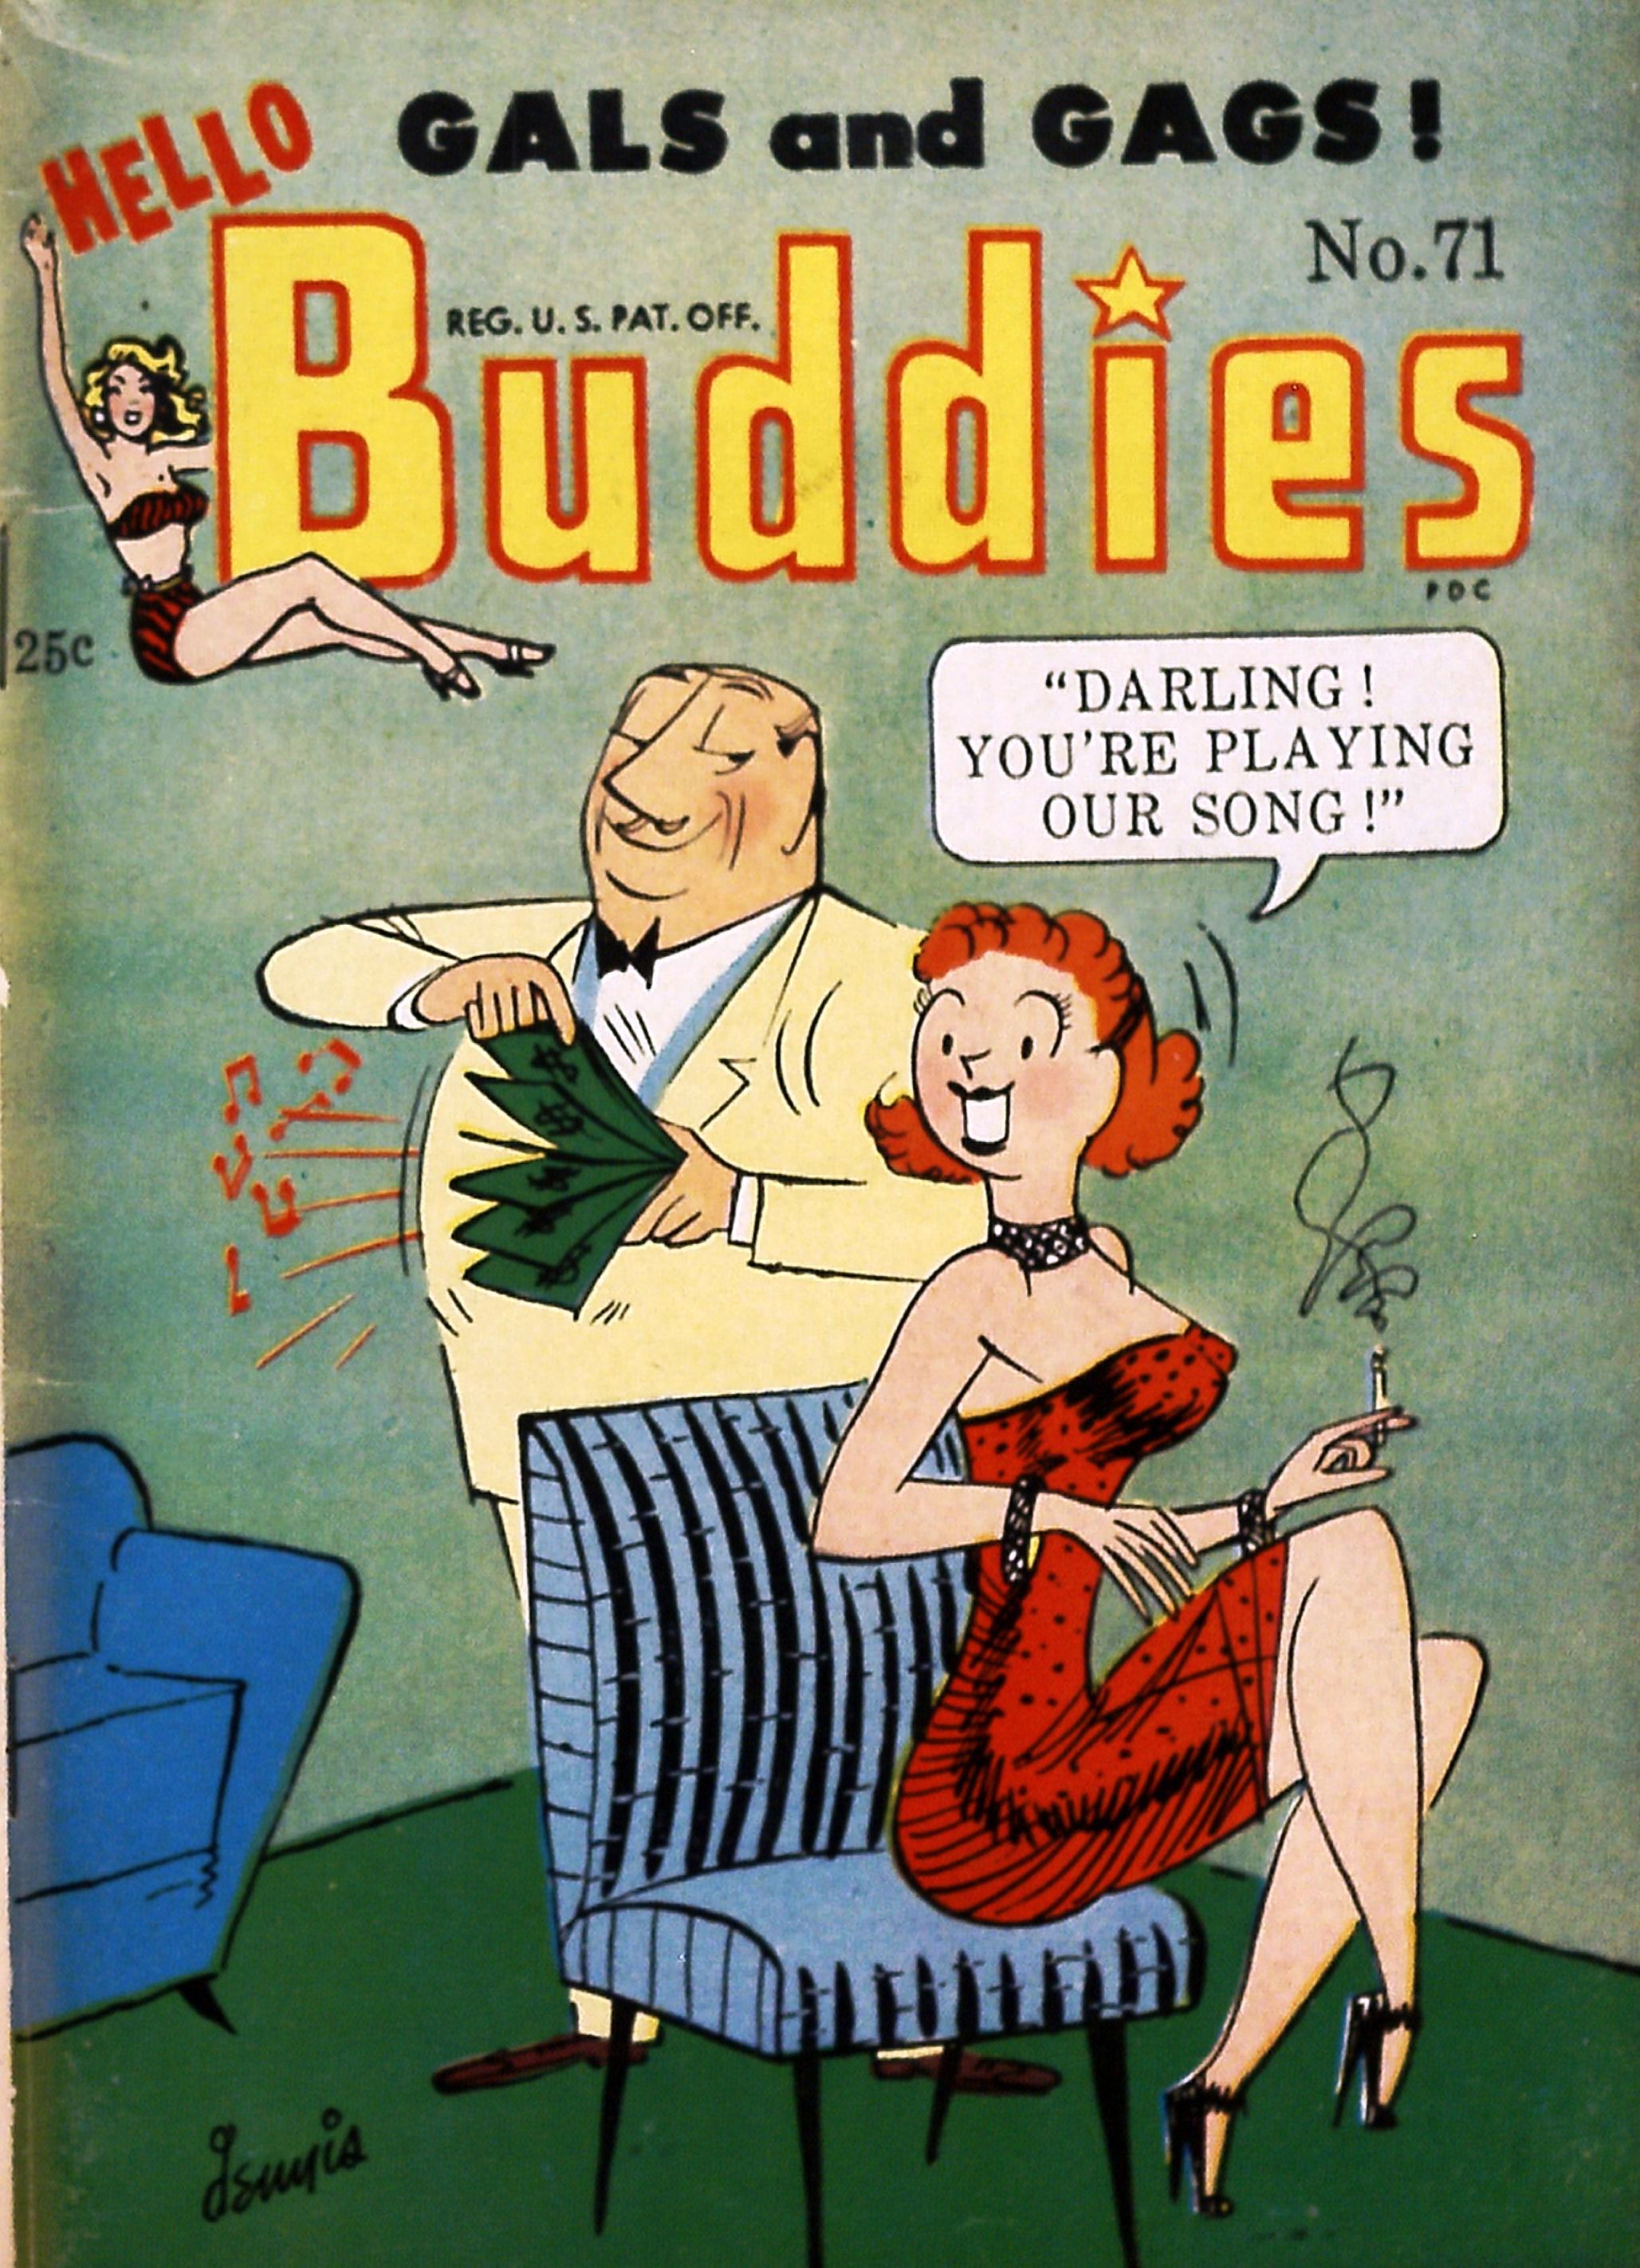 Read online Hello Buddies comic -  Issue #71 - 1